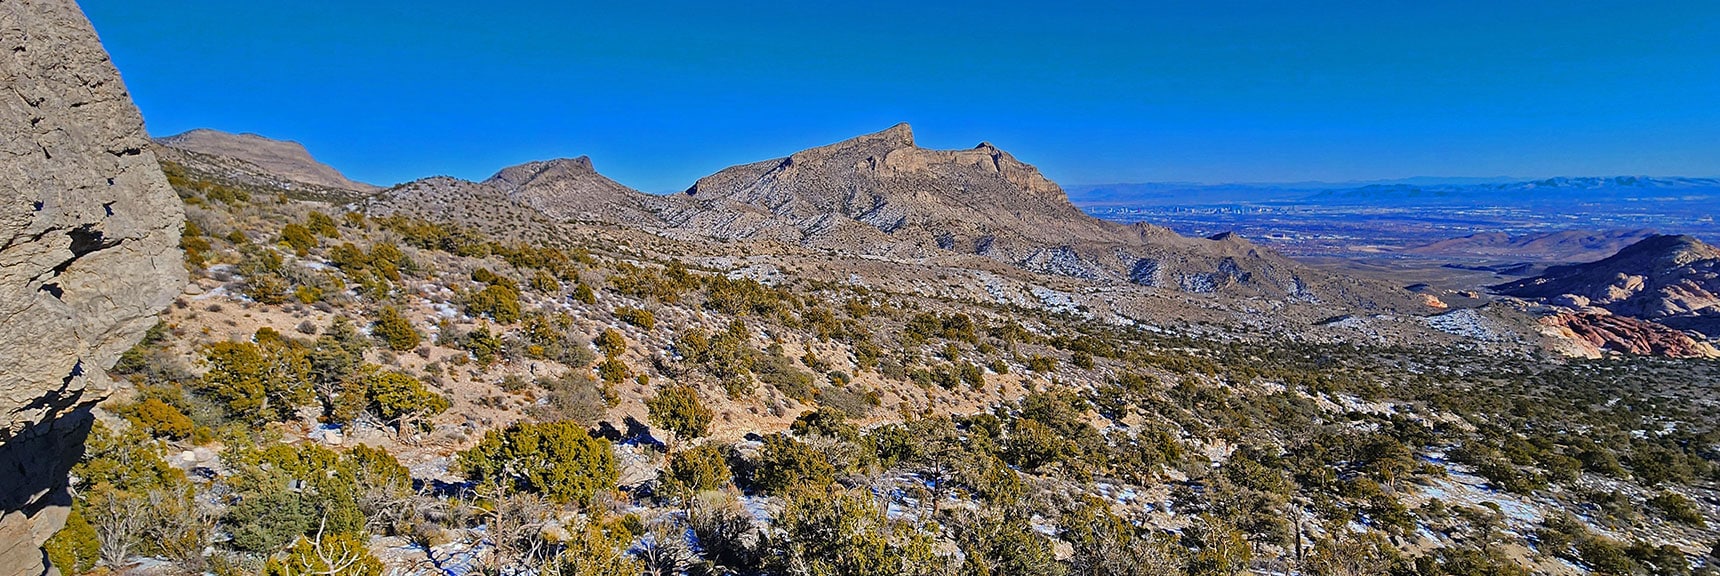 Damsel Peak (right) Gateway Peak (left) from Above Brownstone Trail Summit. | 3 Basin Circuit | Calico Basin, Brownstone Basin, Red Rock Canyon, Nevada